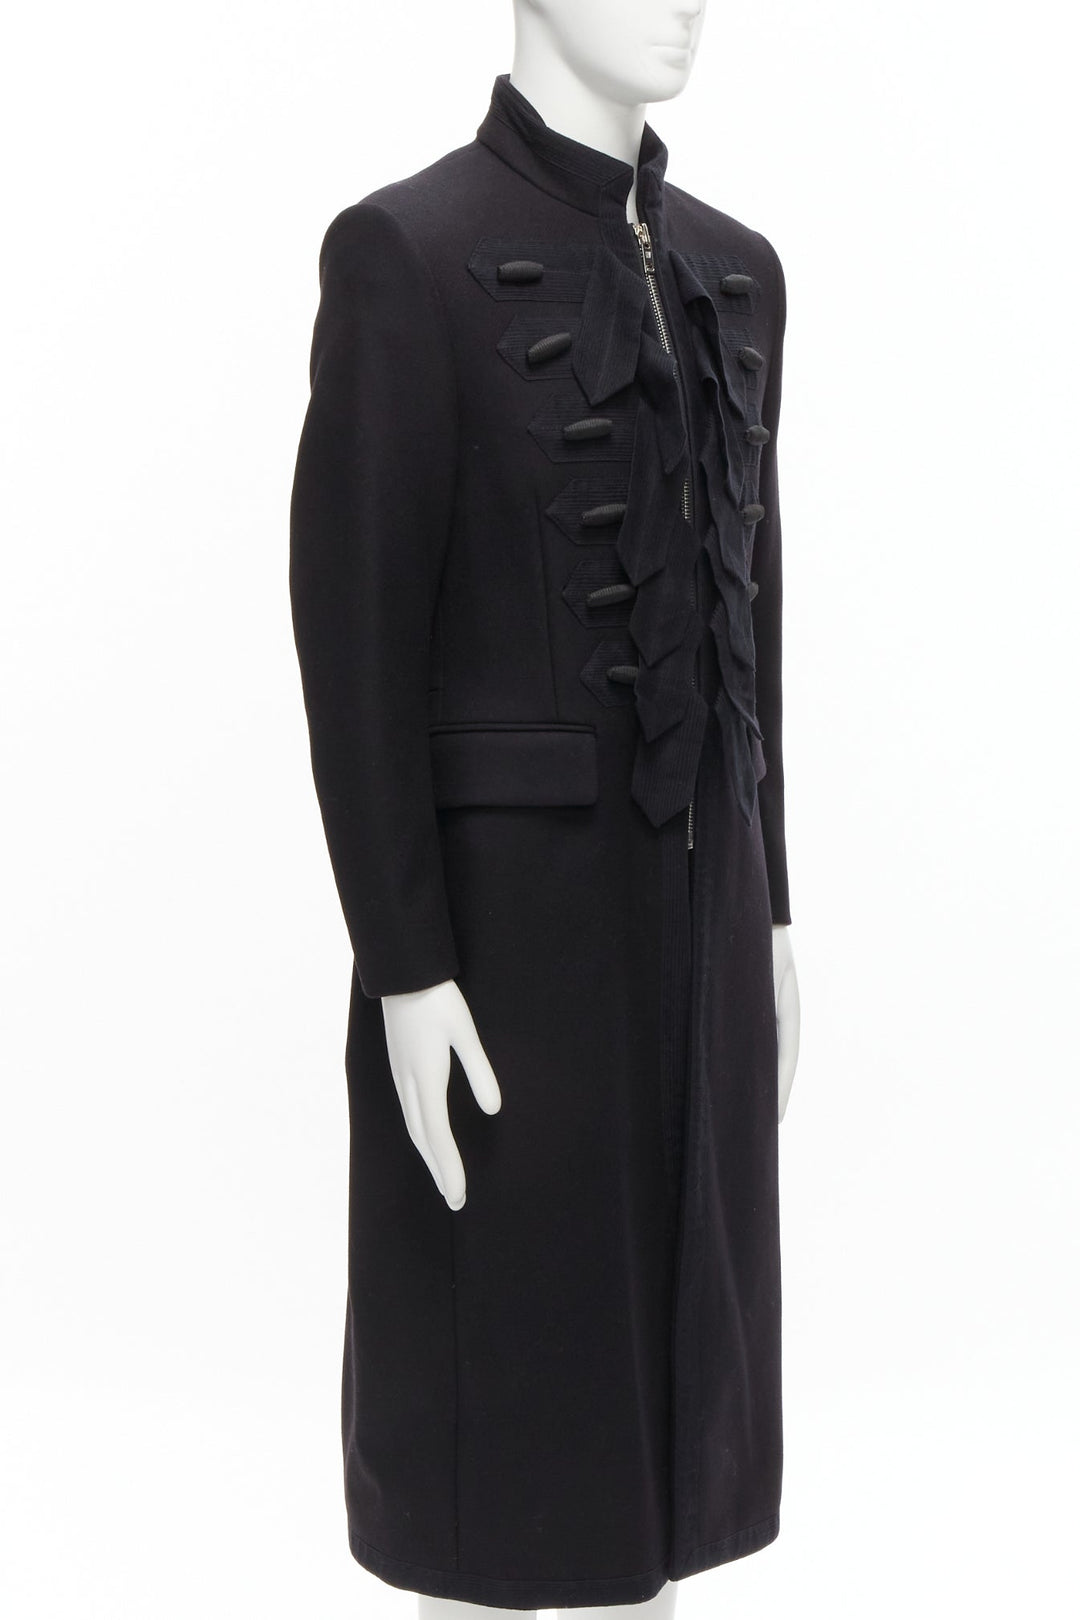 rare GIAMBATTISTA VALLI H&M black wool embellished military coat IT48 M